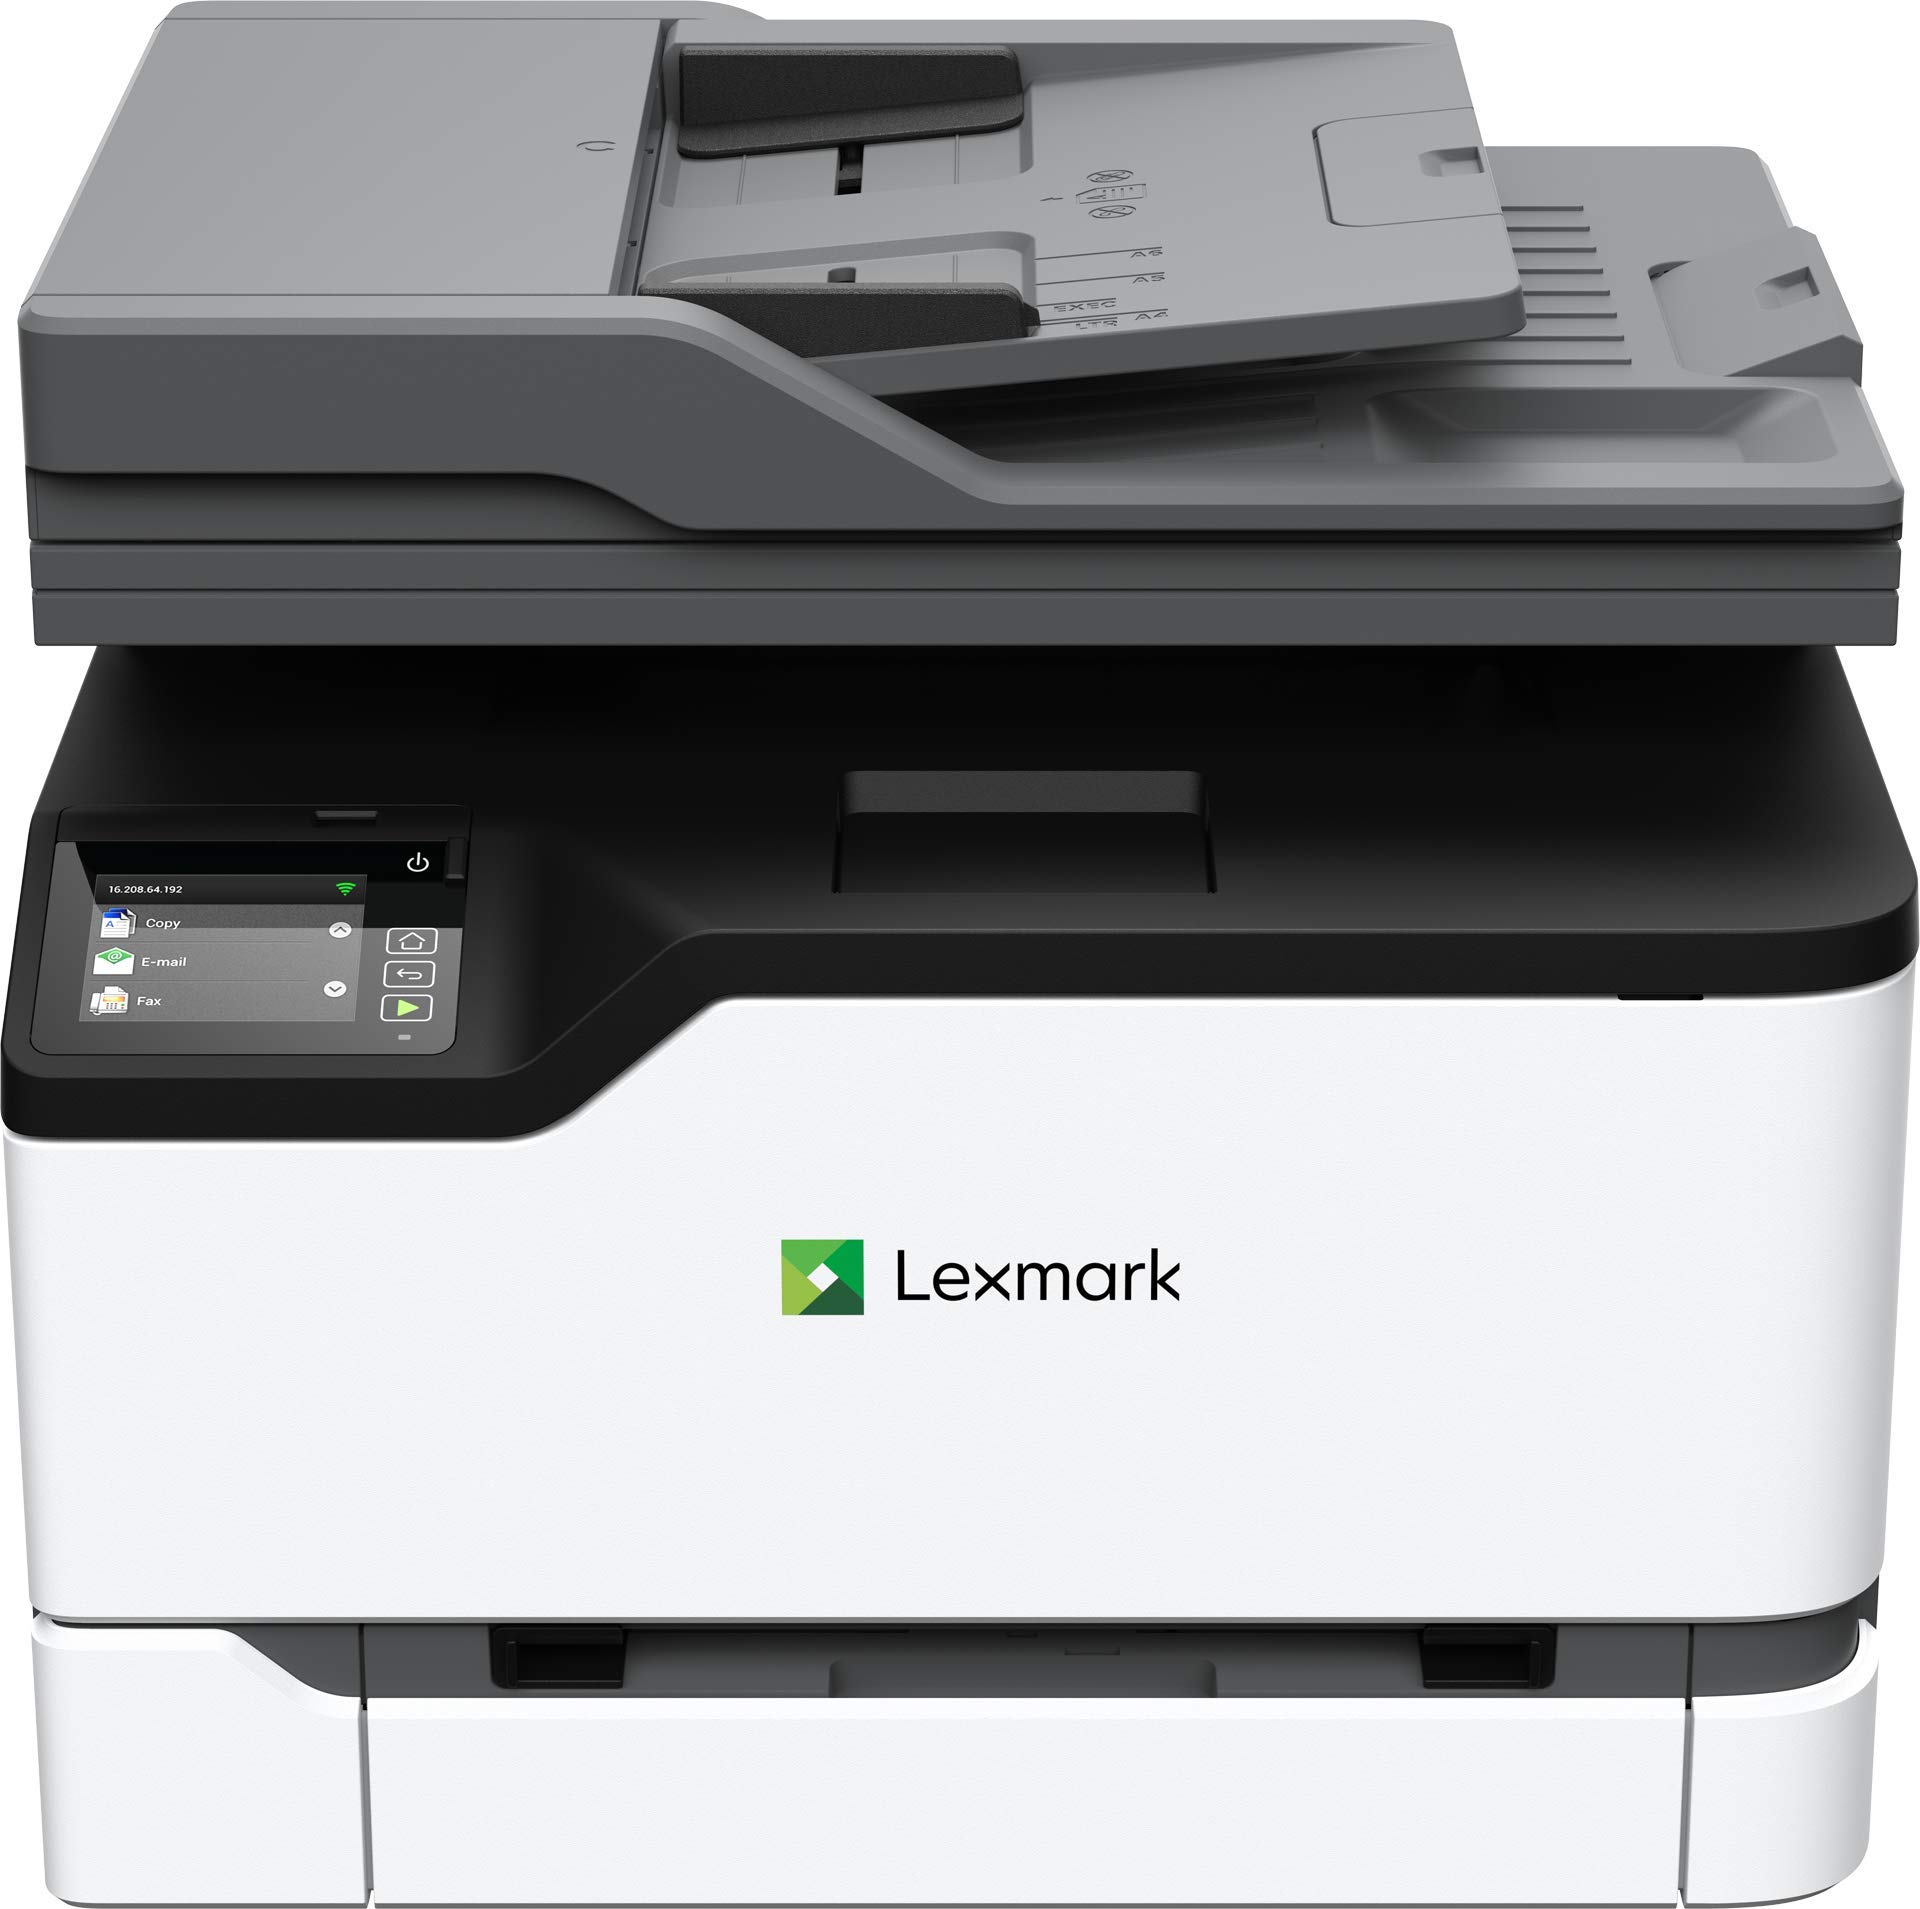  Lexmark طابعة ليزر ملونة متعددة الوظائف MC3326i مزودة بإمكانيات الطباعة والنسخ والمسح الضوئي واللاسلكية والطباعة...